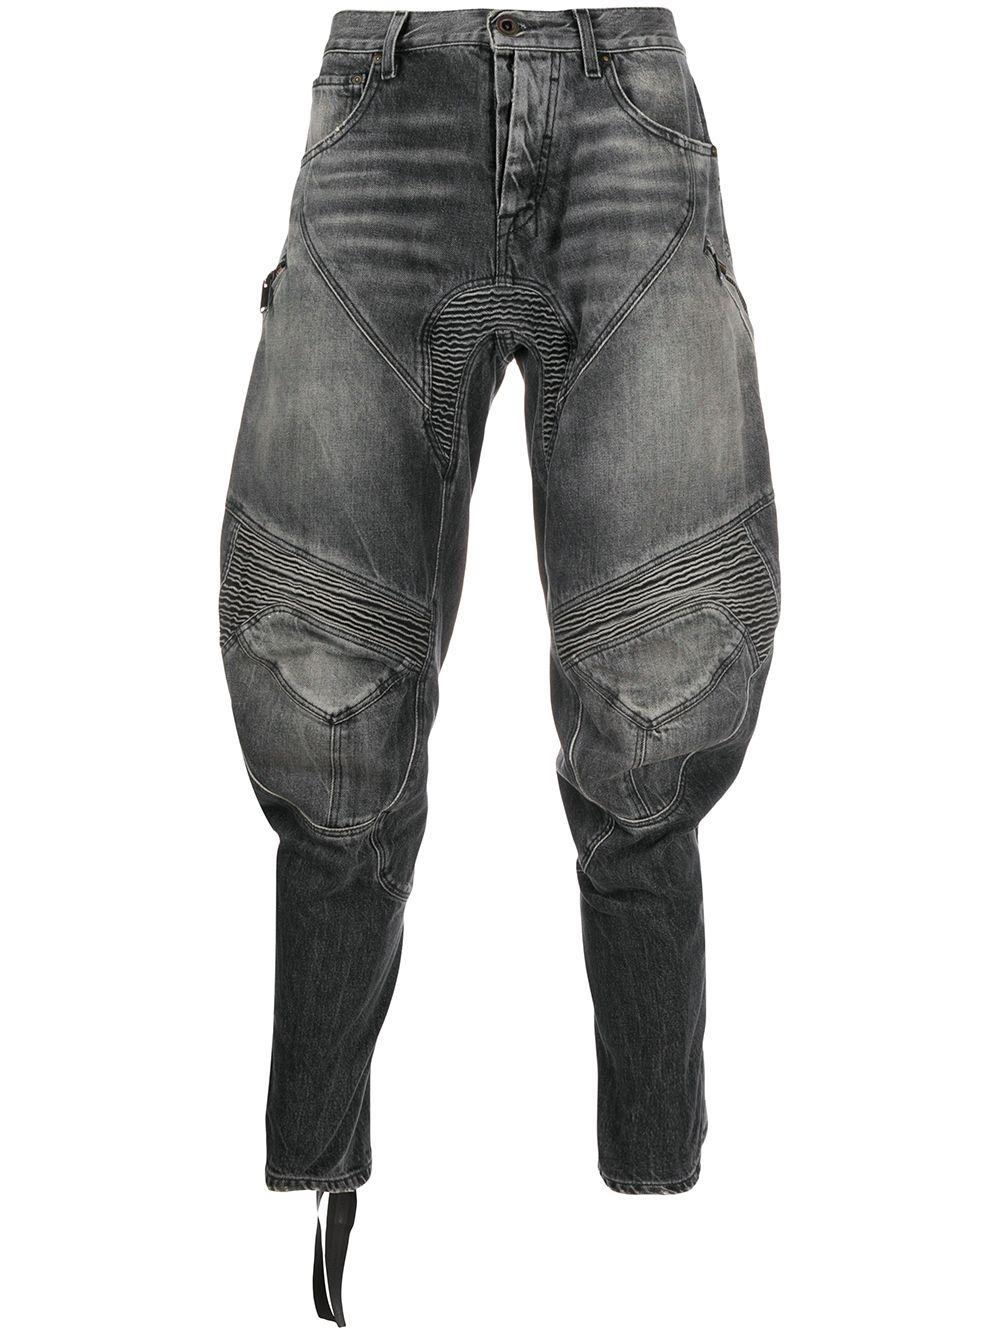 tapered biker jeans